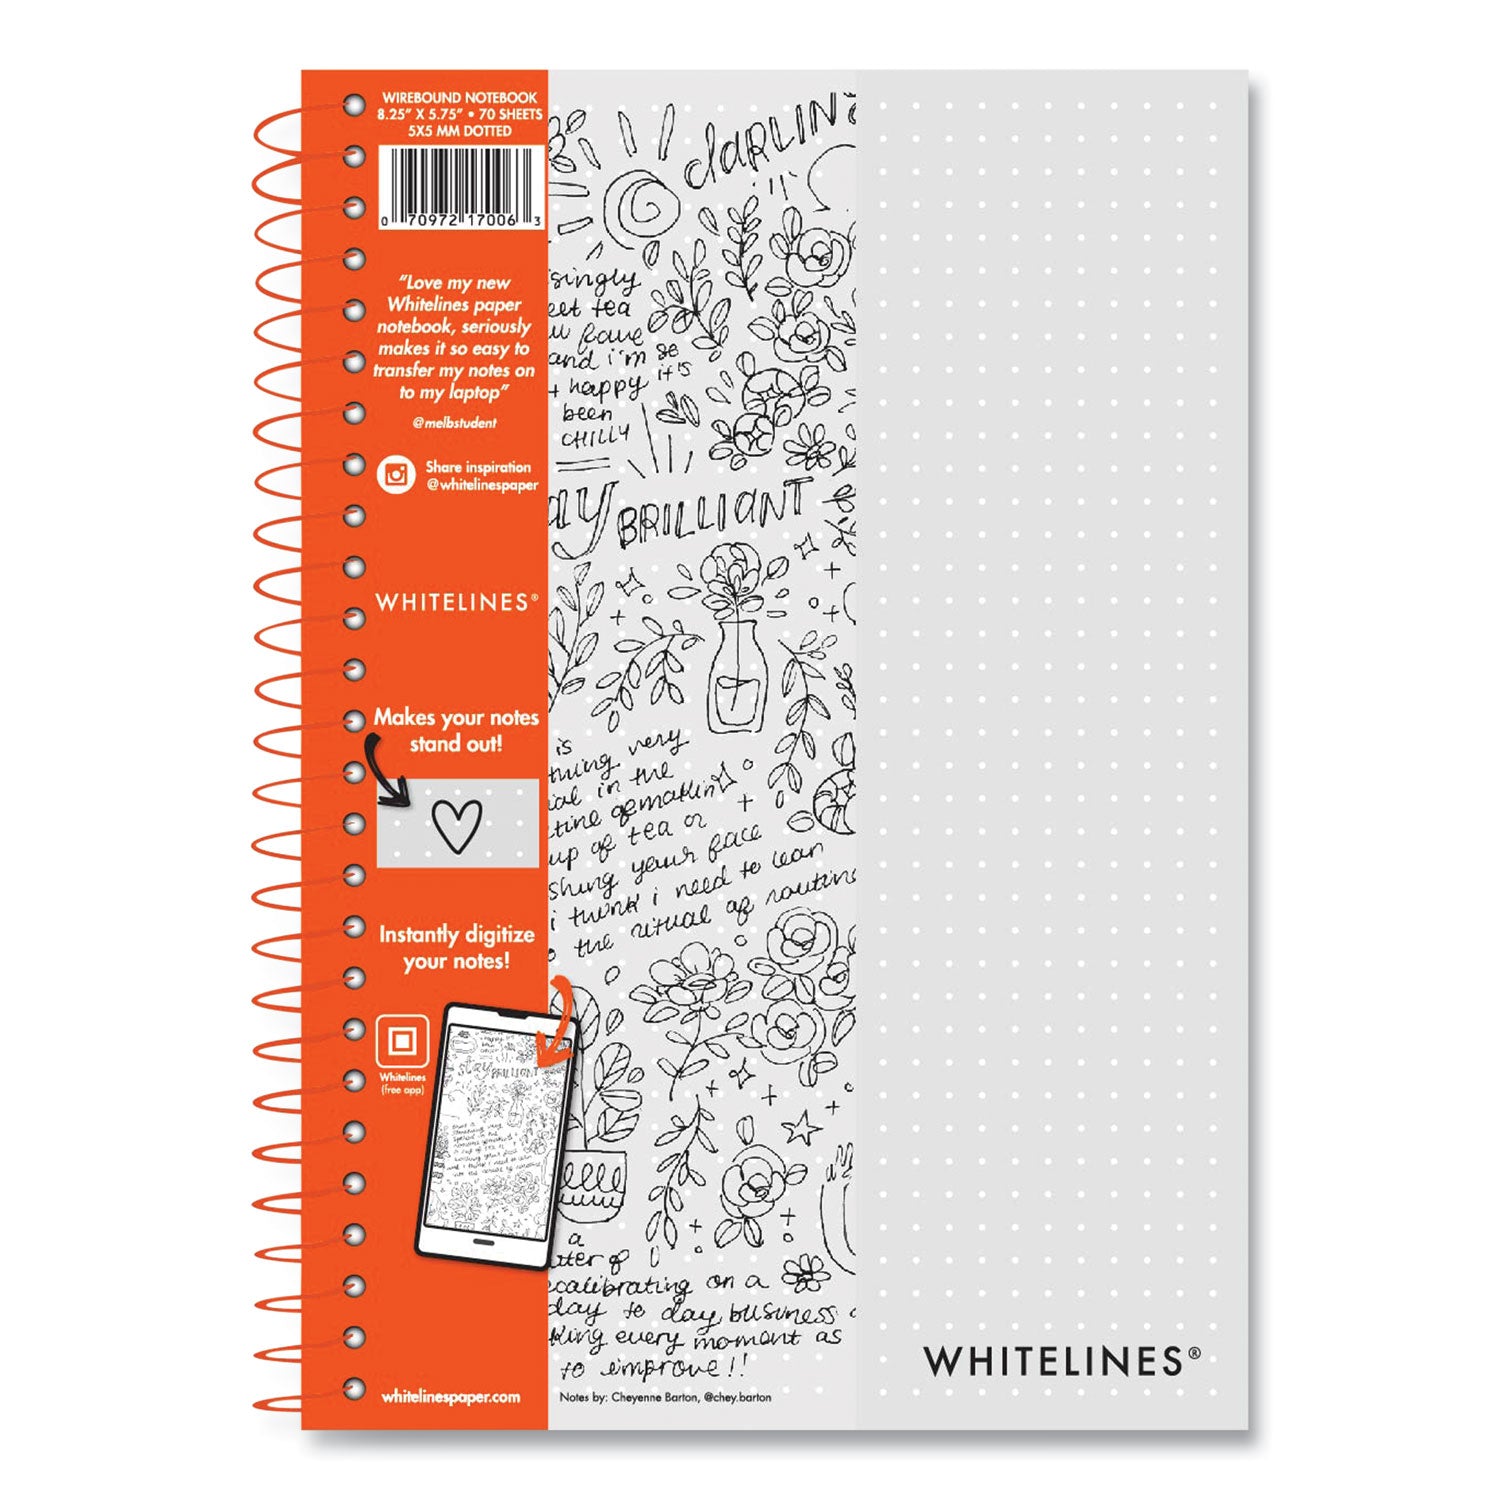 whitelines-notebook-dot-rule-5-mm-gray-orange-cover-70-825-x-575-sheets-12-carton-ships-in-4-6-business-days_roa17006cs - 2